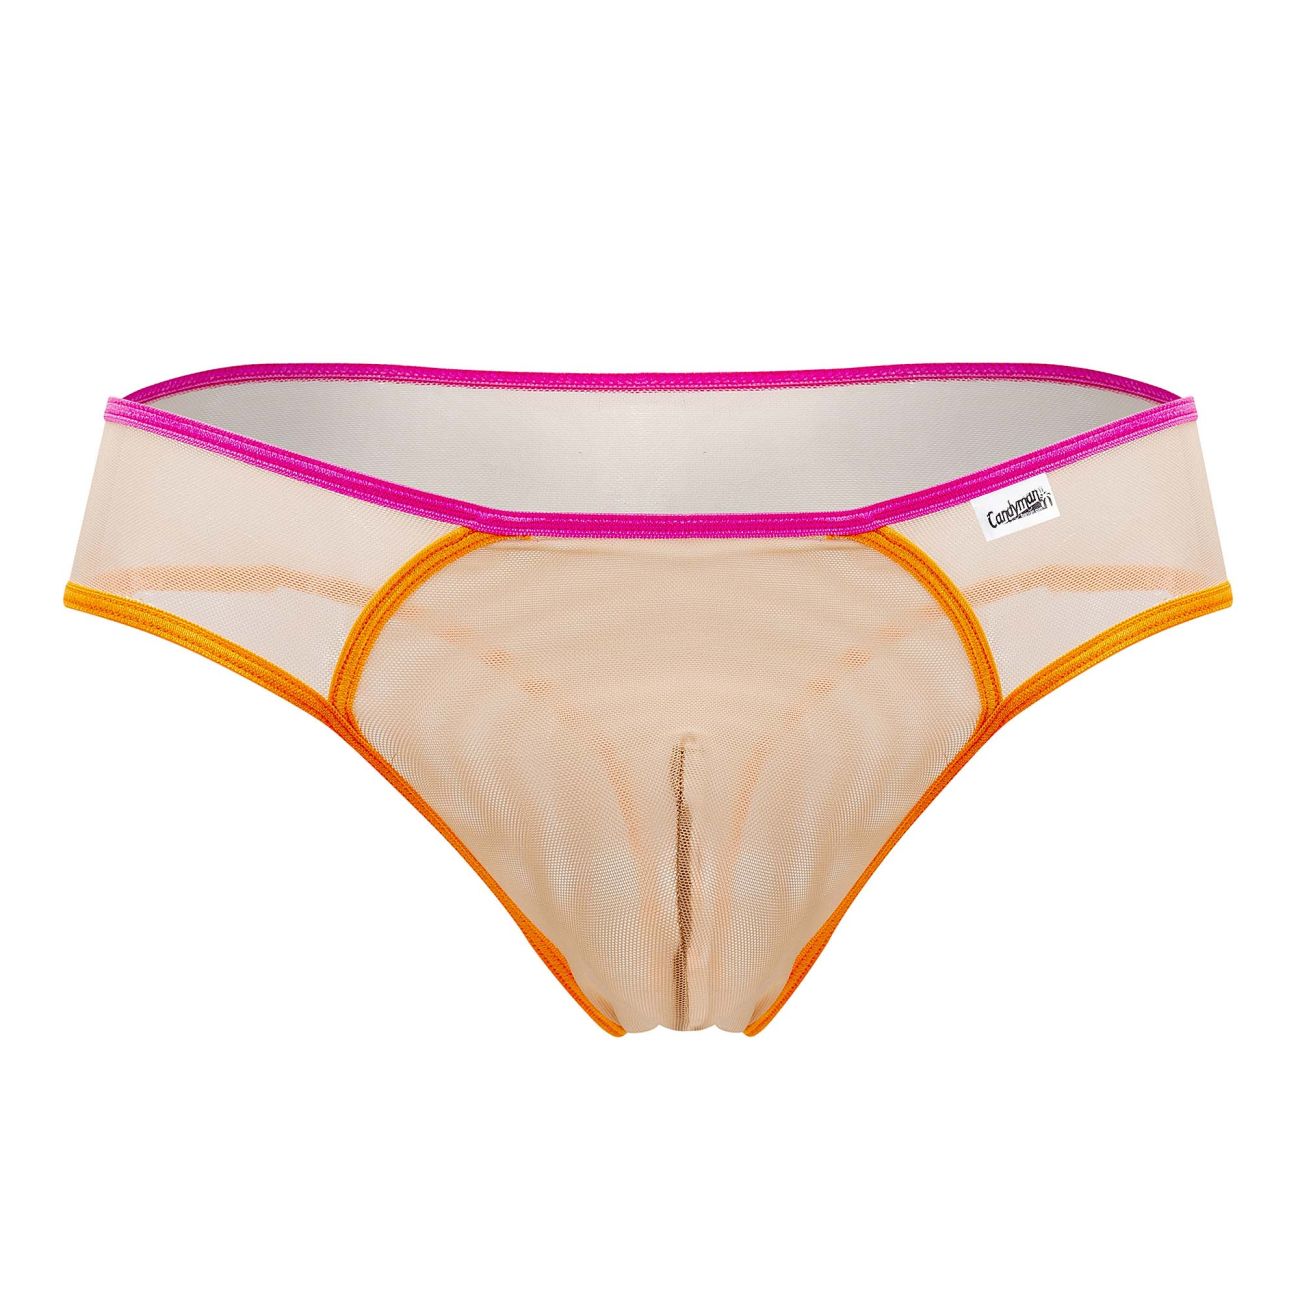 Candyman 99548 Invisible Micro Thongs Hot Pink